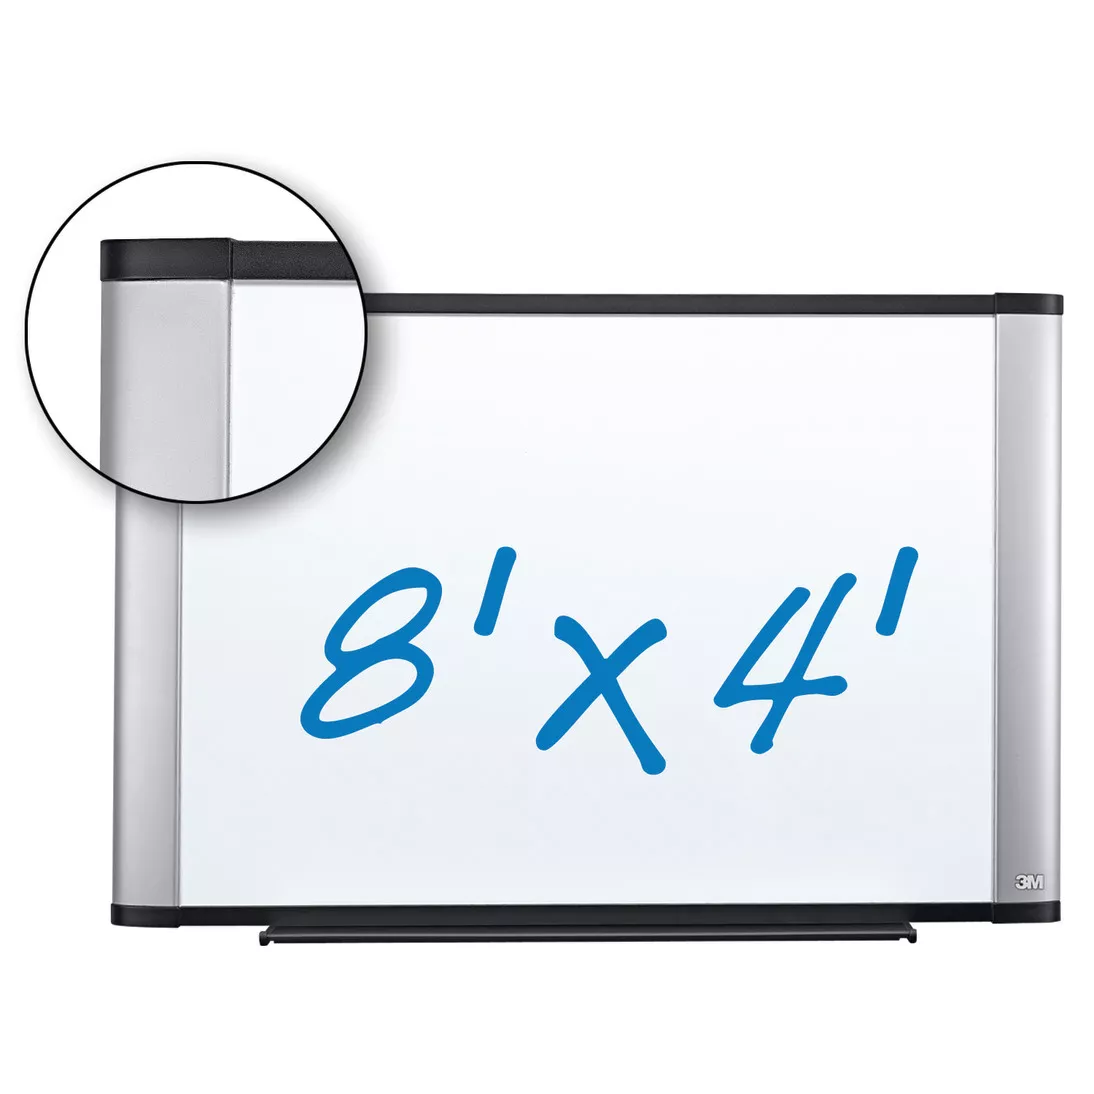 3M™ Porcelain Dry Erase Board P9648A, 96 in x 48 in x 1 in (243.8 cm x
121.9 cm x 2.5 cm) Magnetic